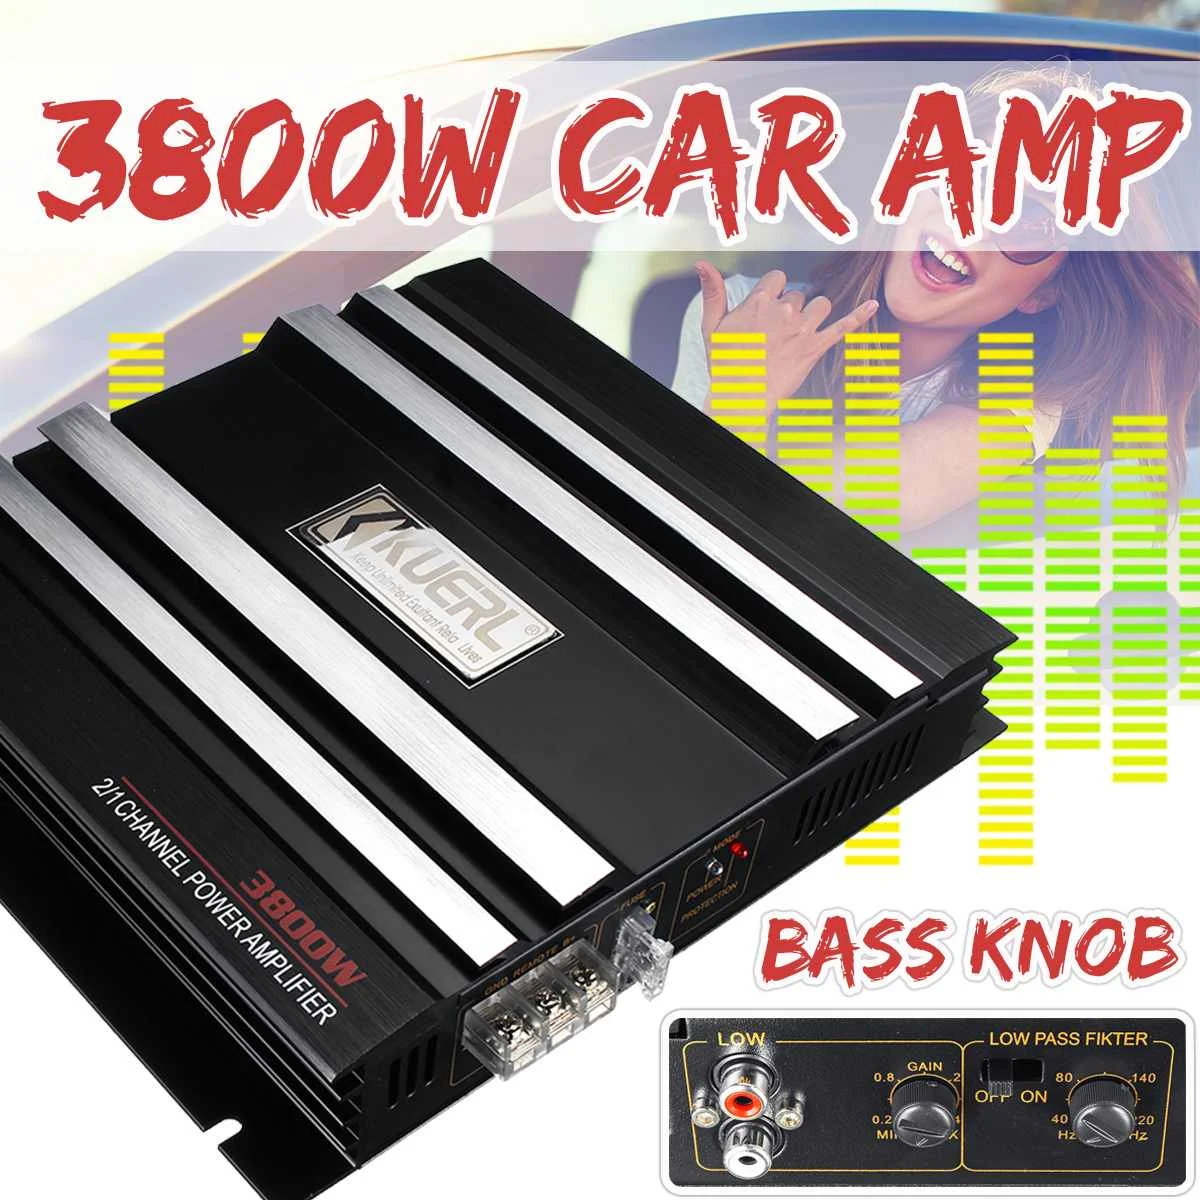 

DC12V 3800W Car Amplifier Multichannel Powerful Car Audio Subwoofer Aluminum Alloy Vehicle Power Stereo Amp Car Sound Amplifiers